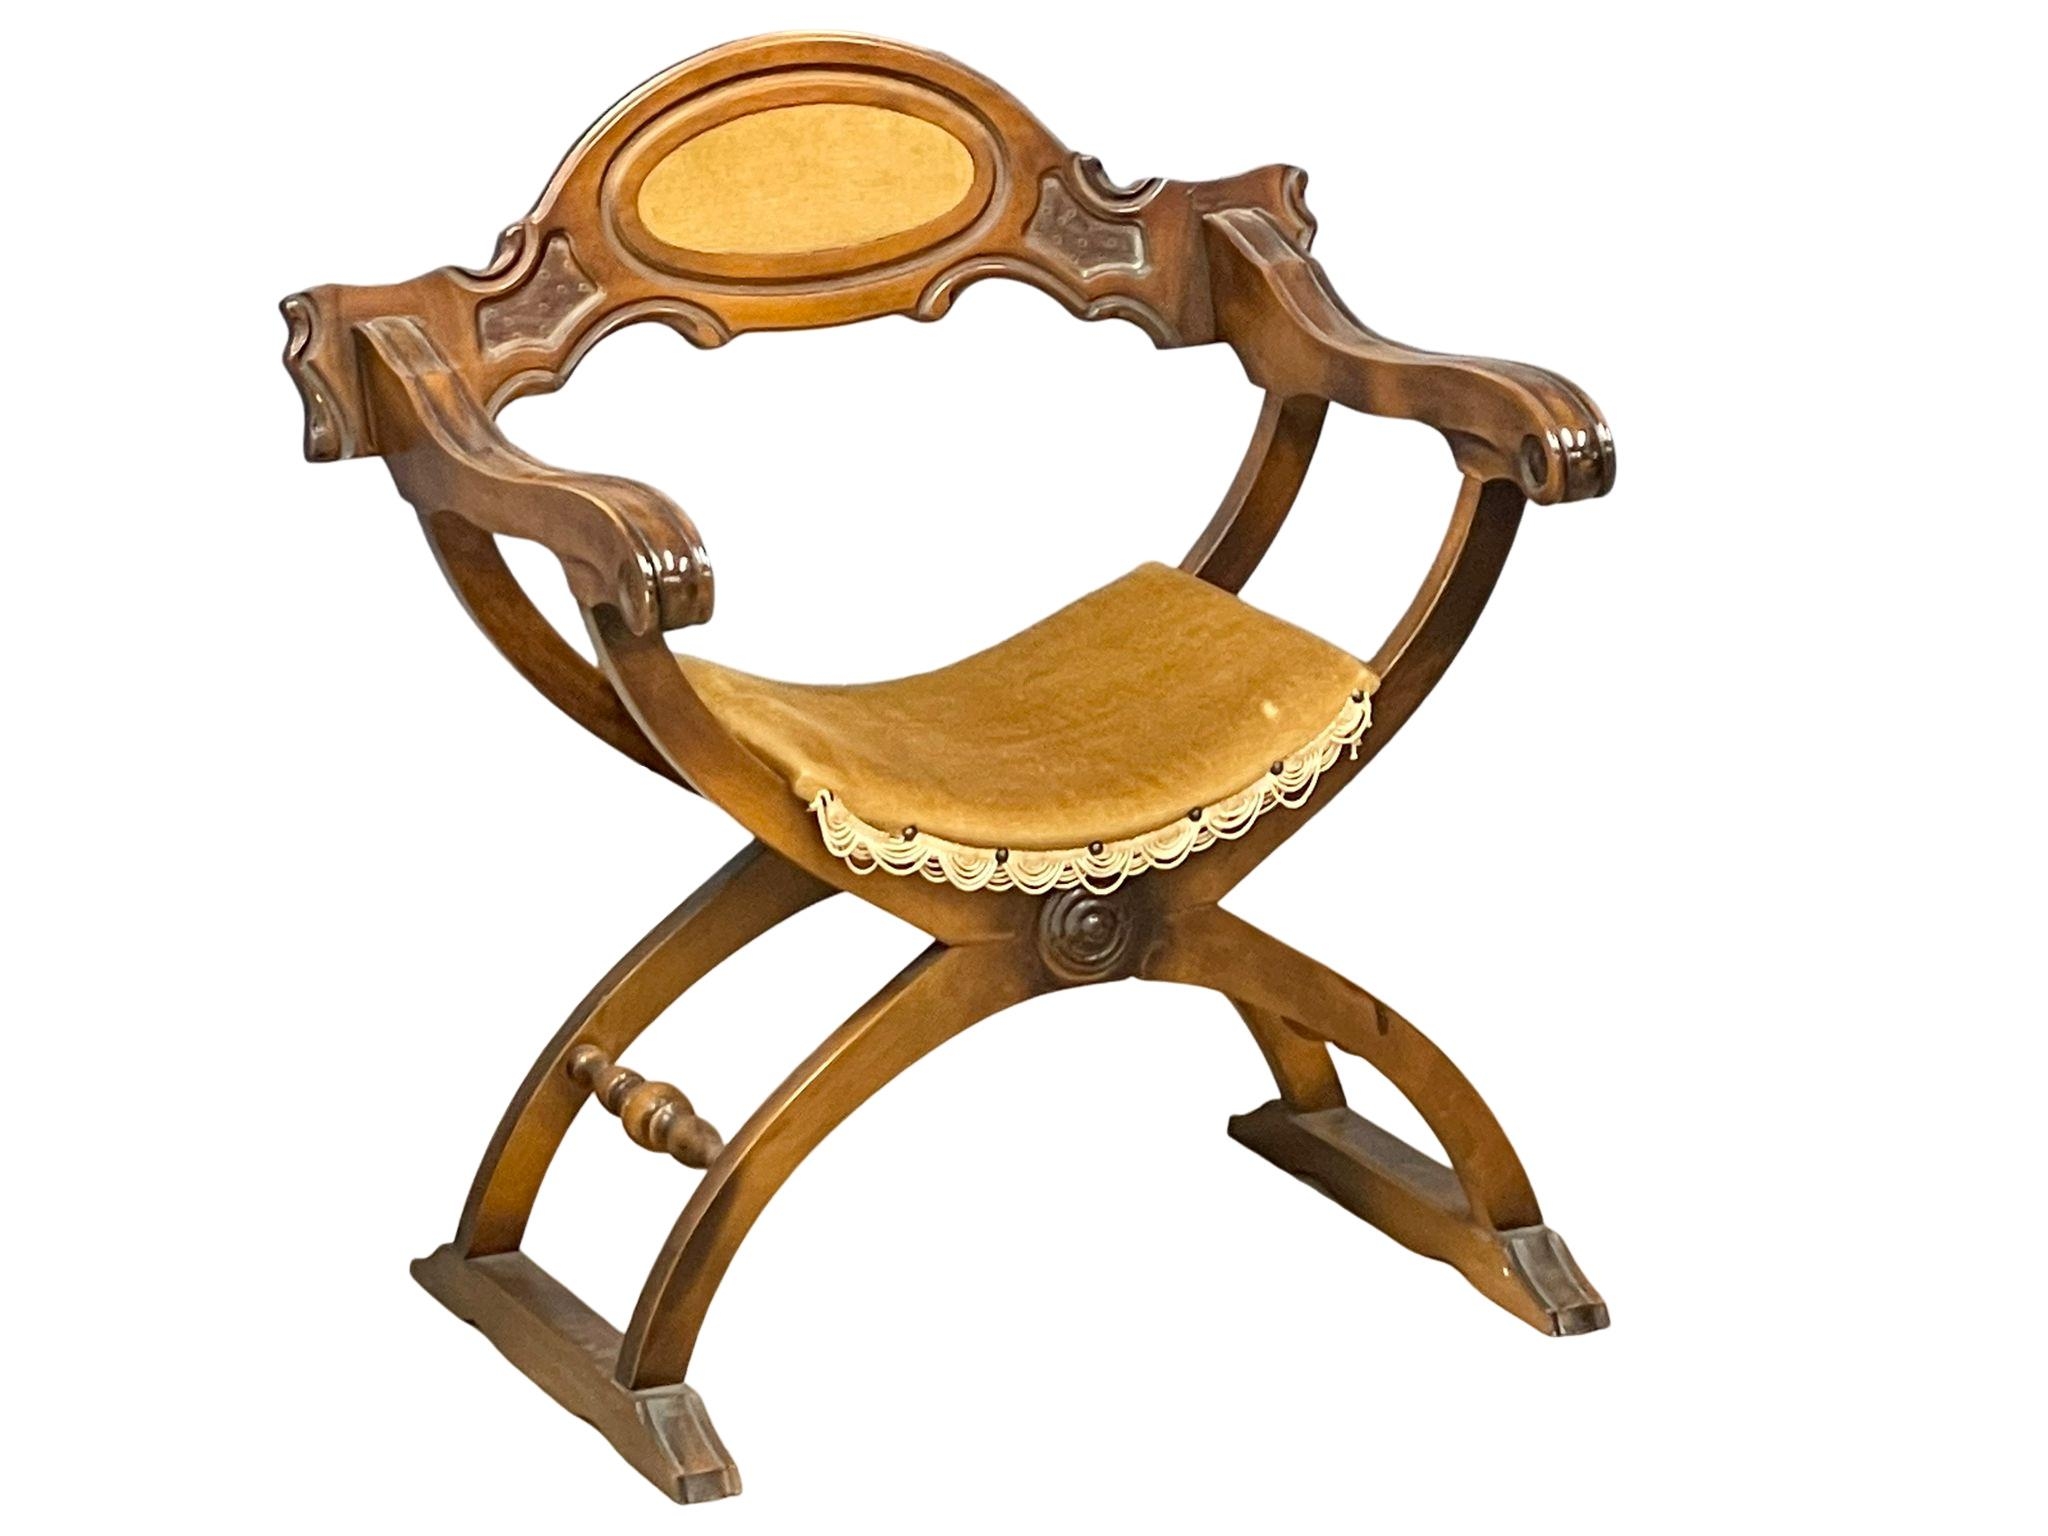 a 19th century style carved x-framed armchair.